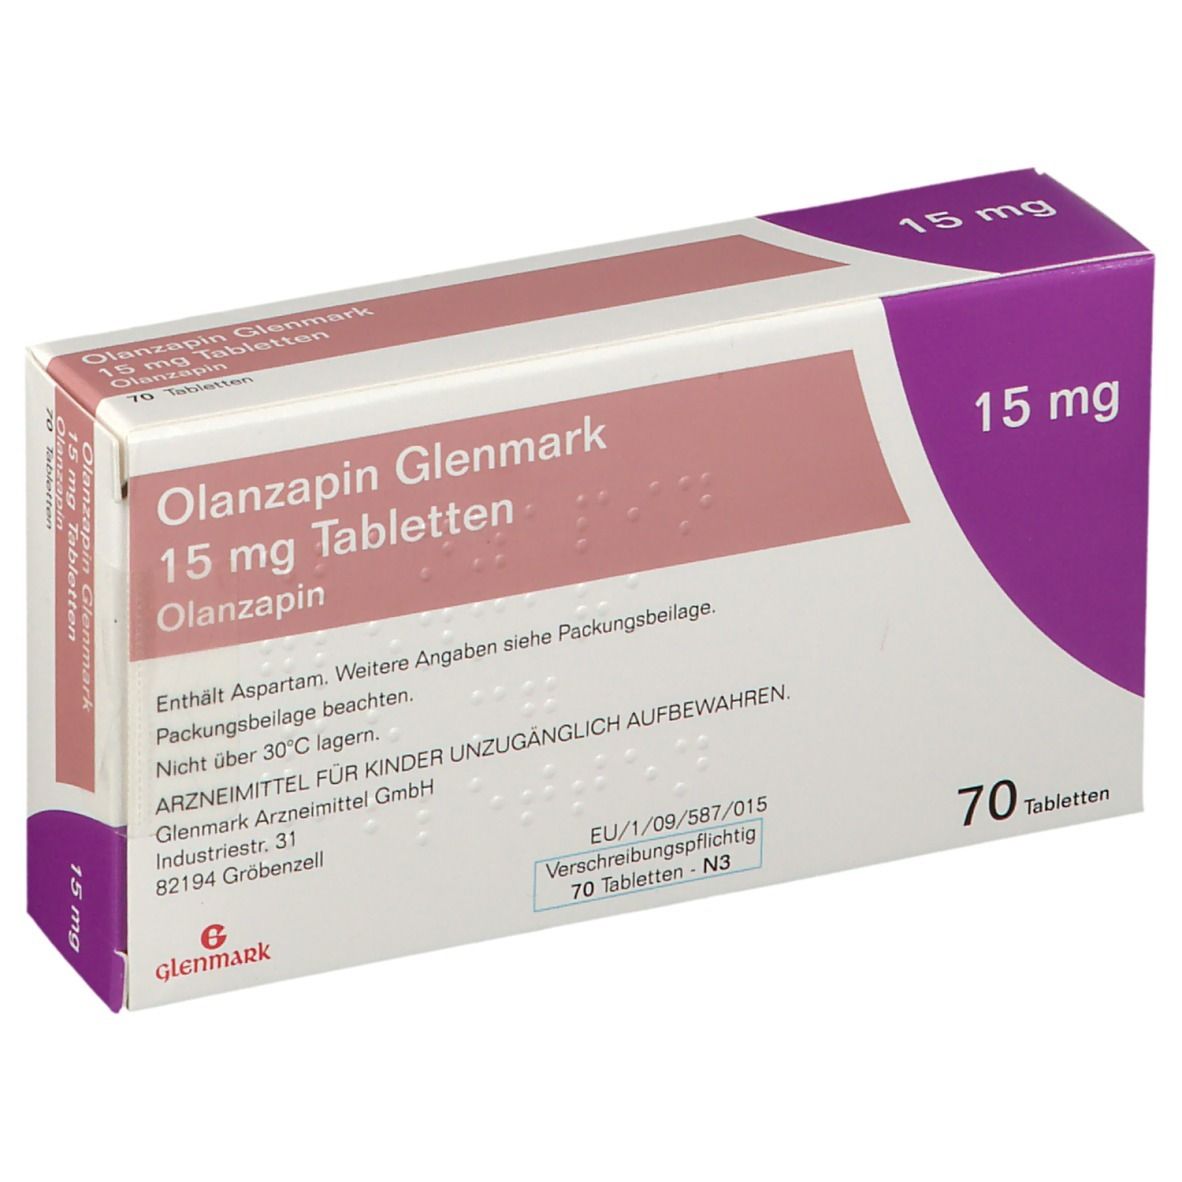 Olanzapin Glenmark 15 mg